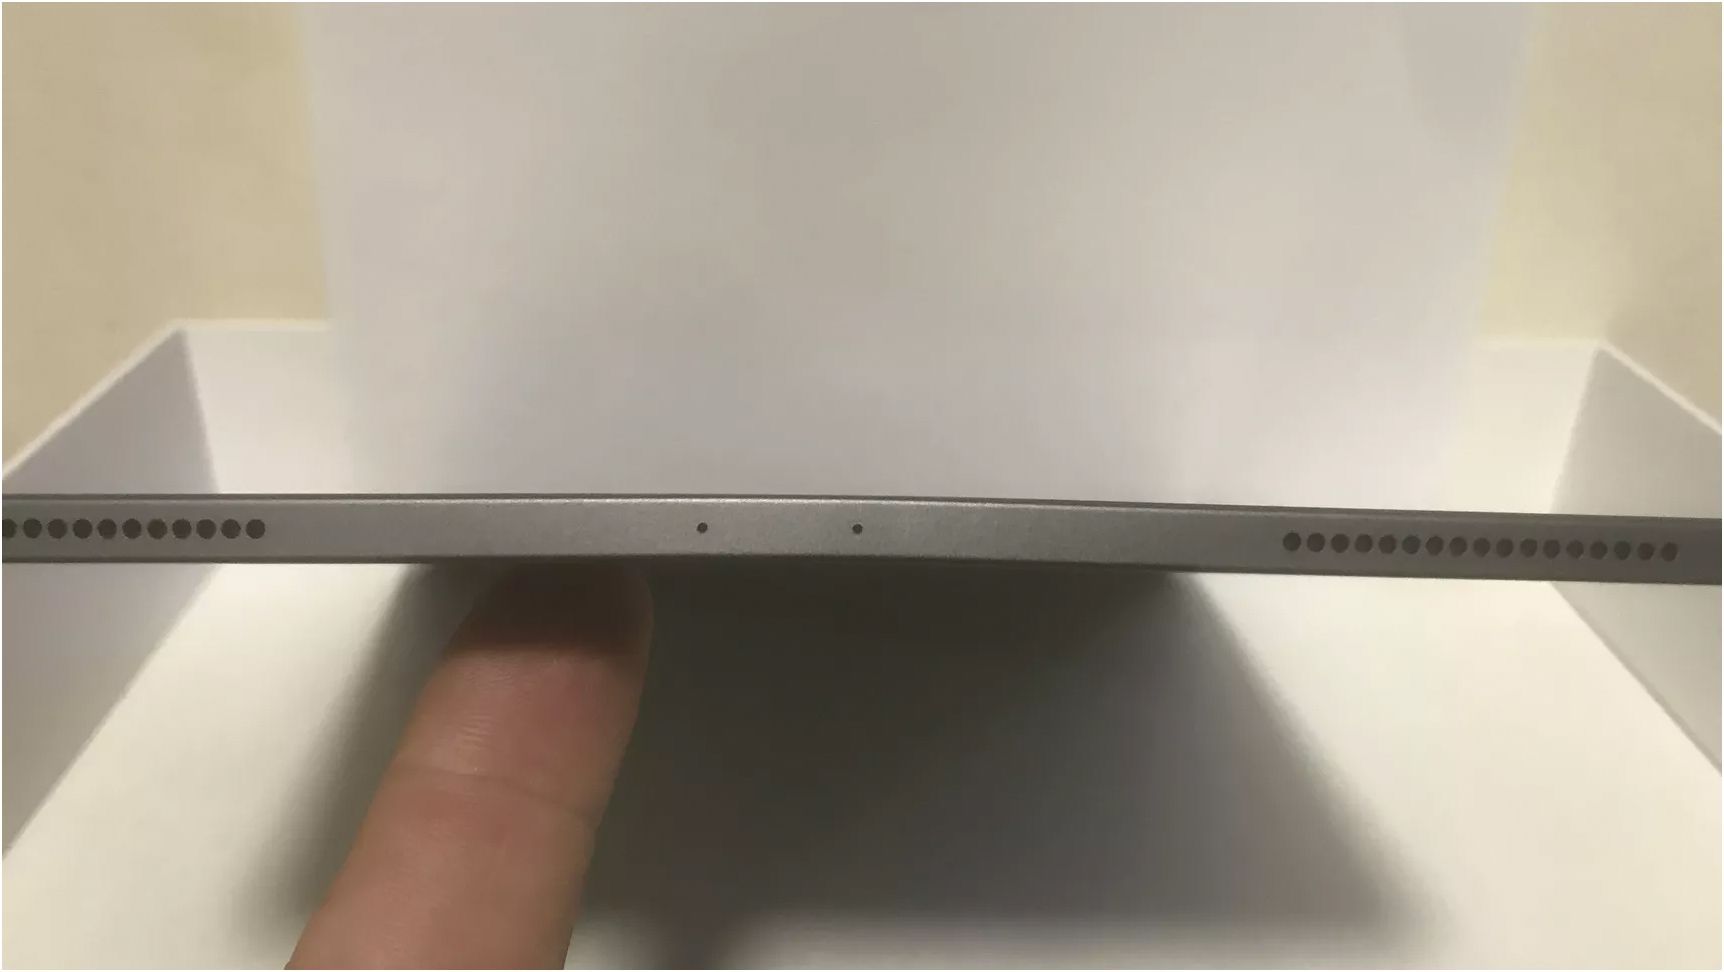 В Apple назвали нормой погнутые iPad Pro